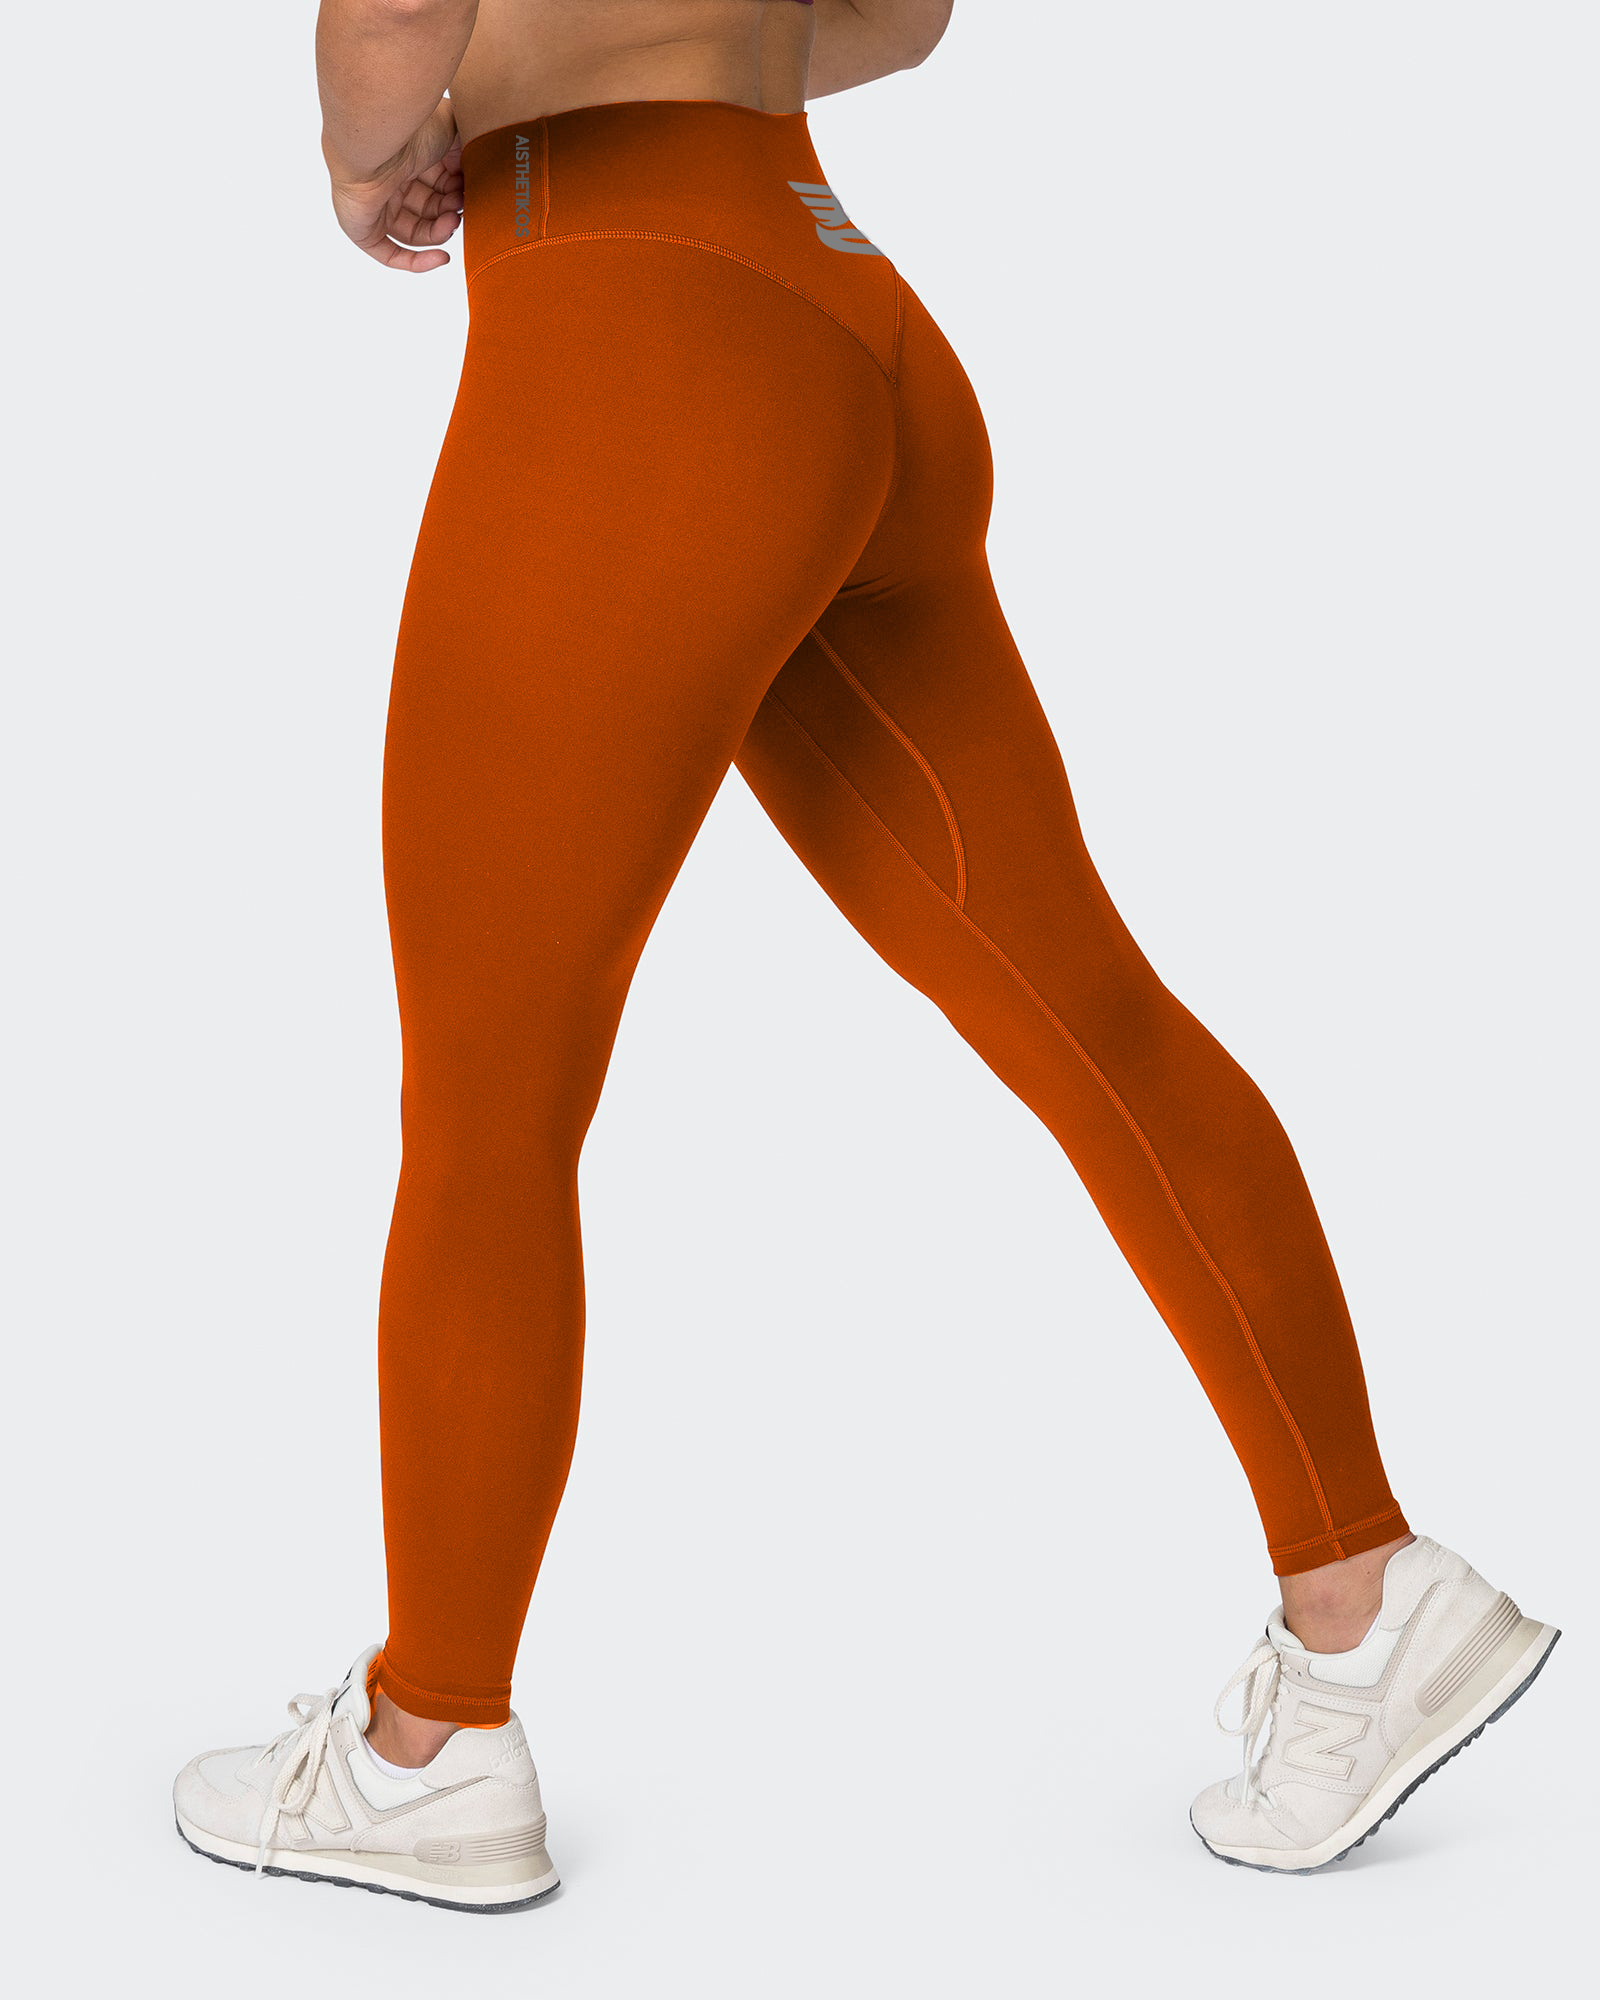 Gymshark Minimal Sports Bra - Charred Orange